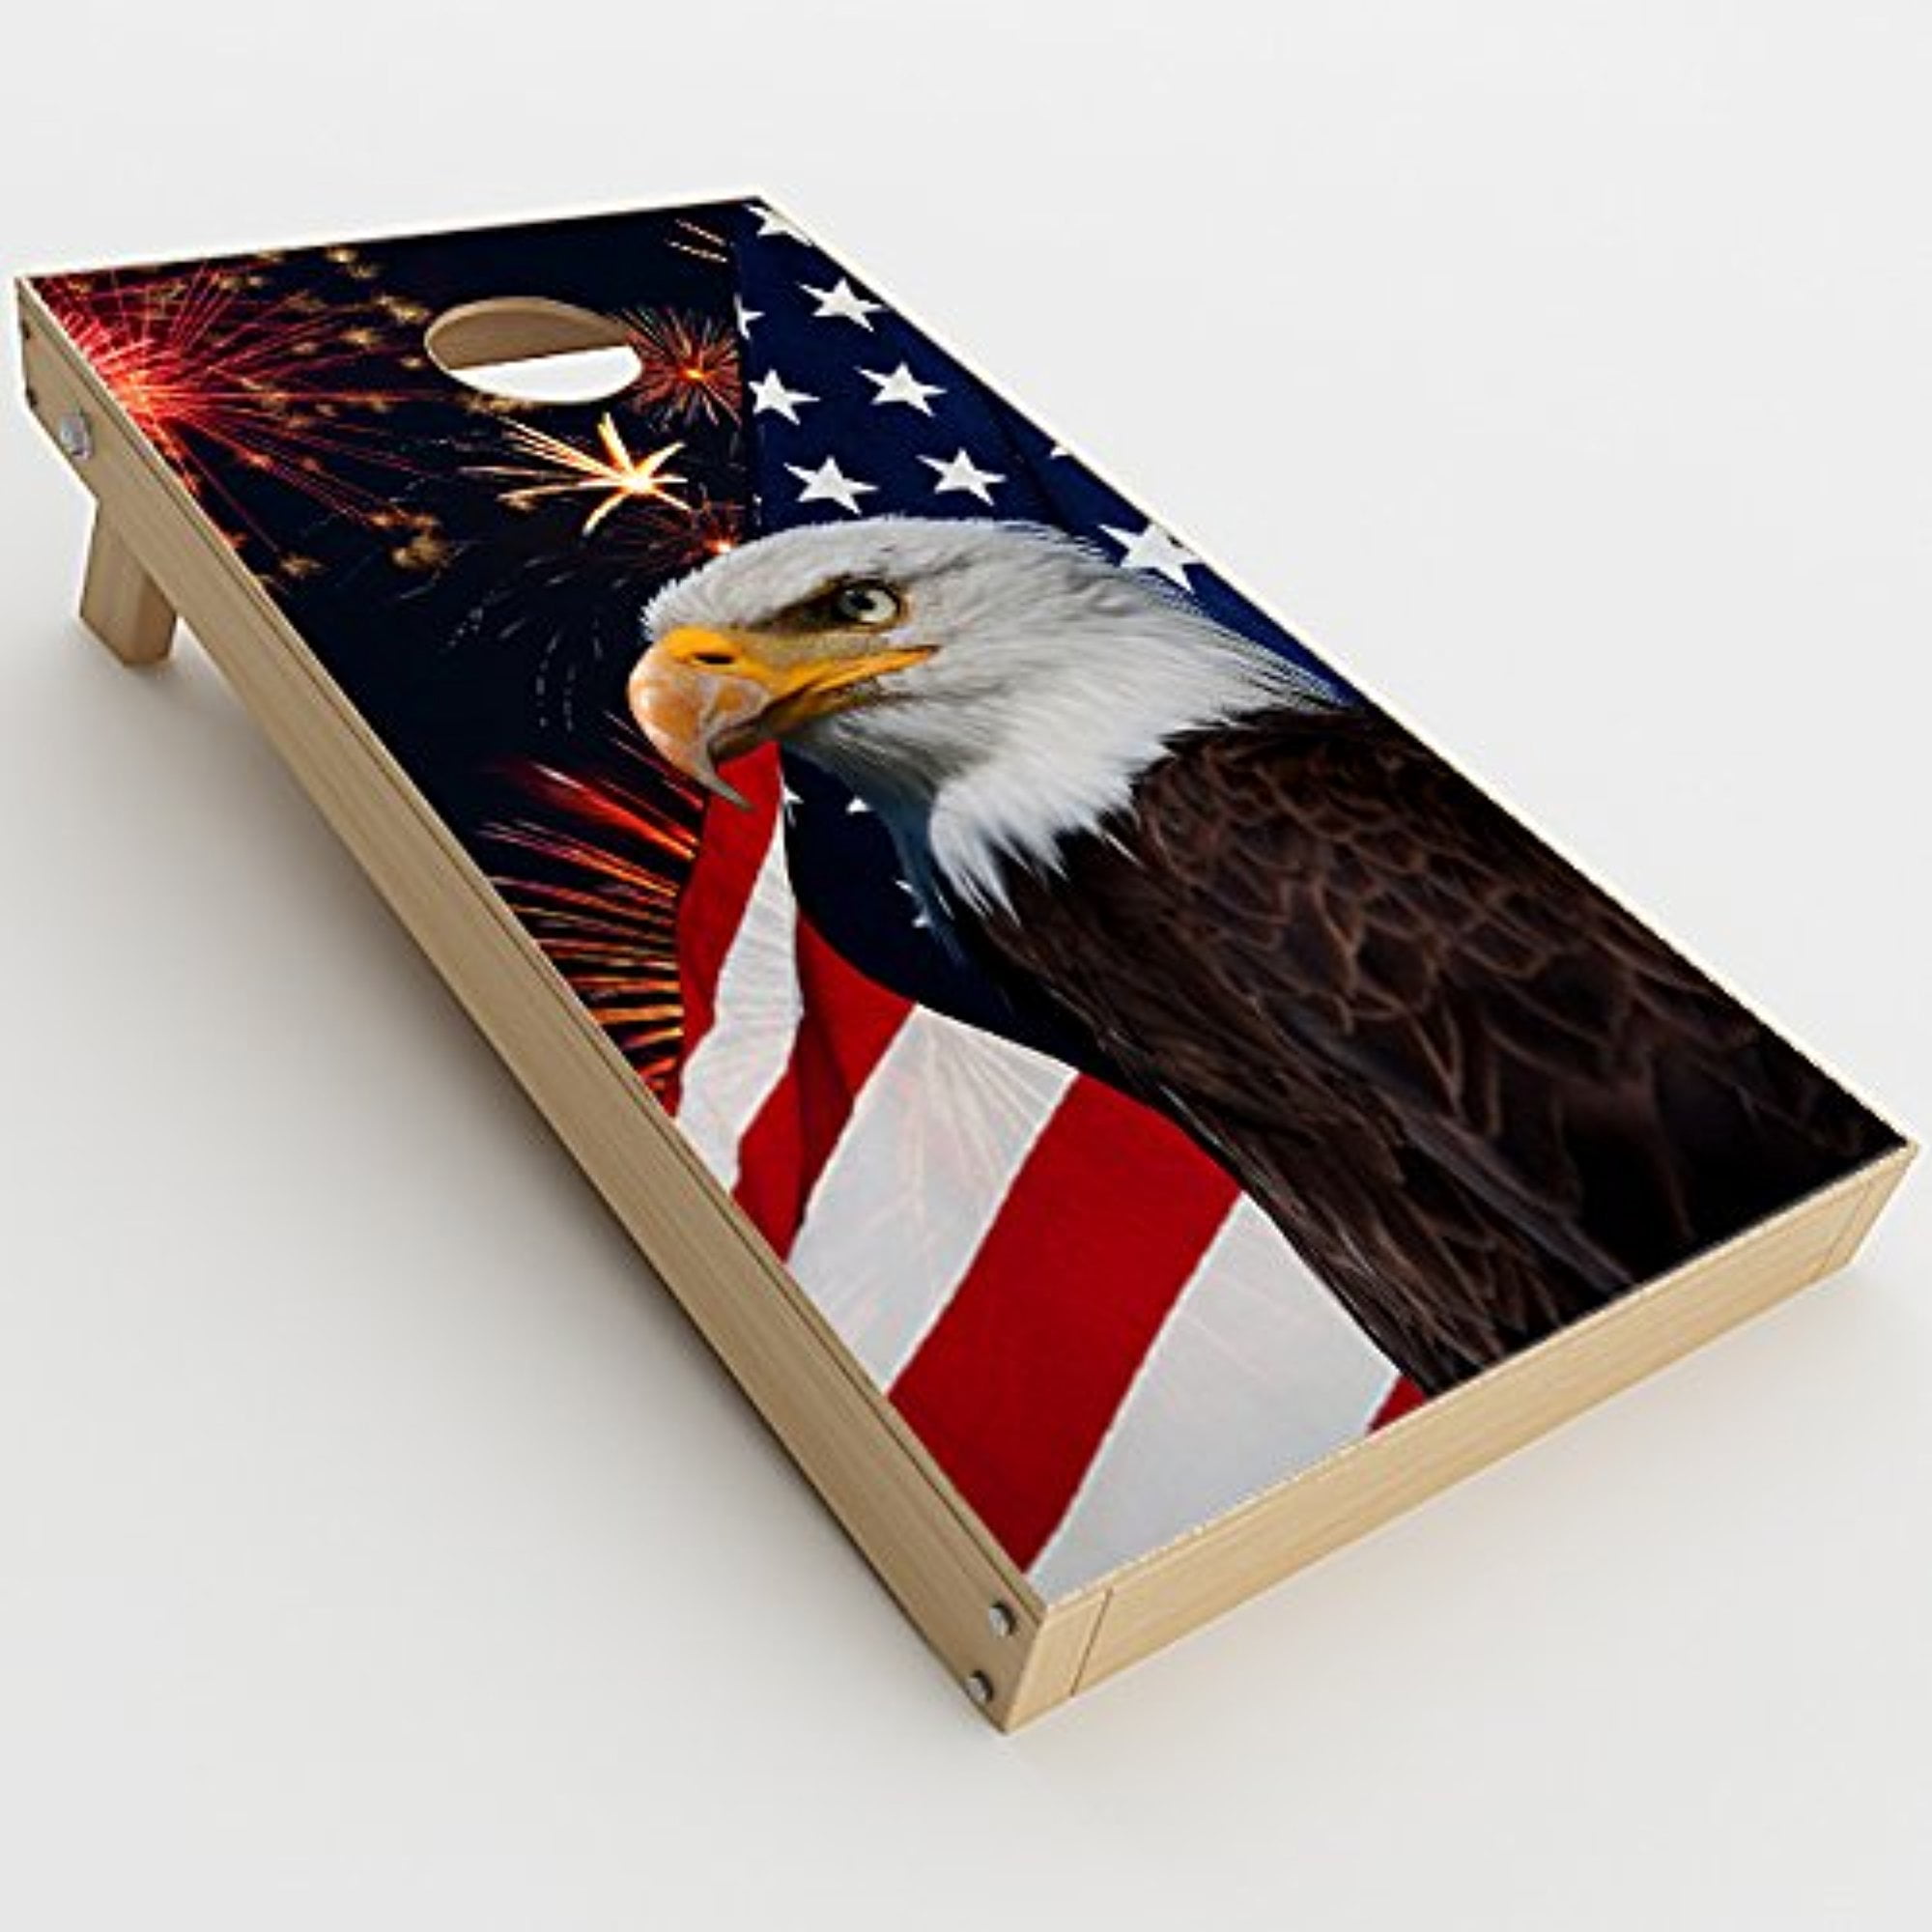 American Flag Cornhole Wraps Vinyl Board Decals Bean Bag Toss Game Stickers 